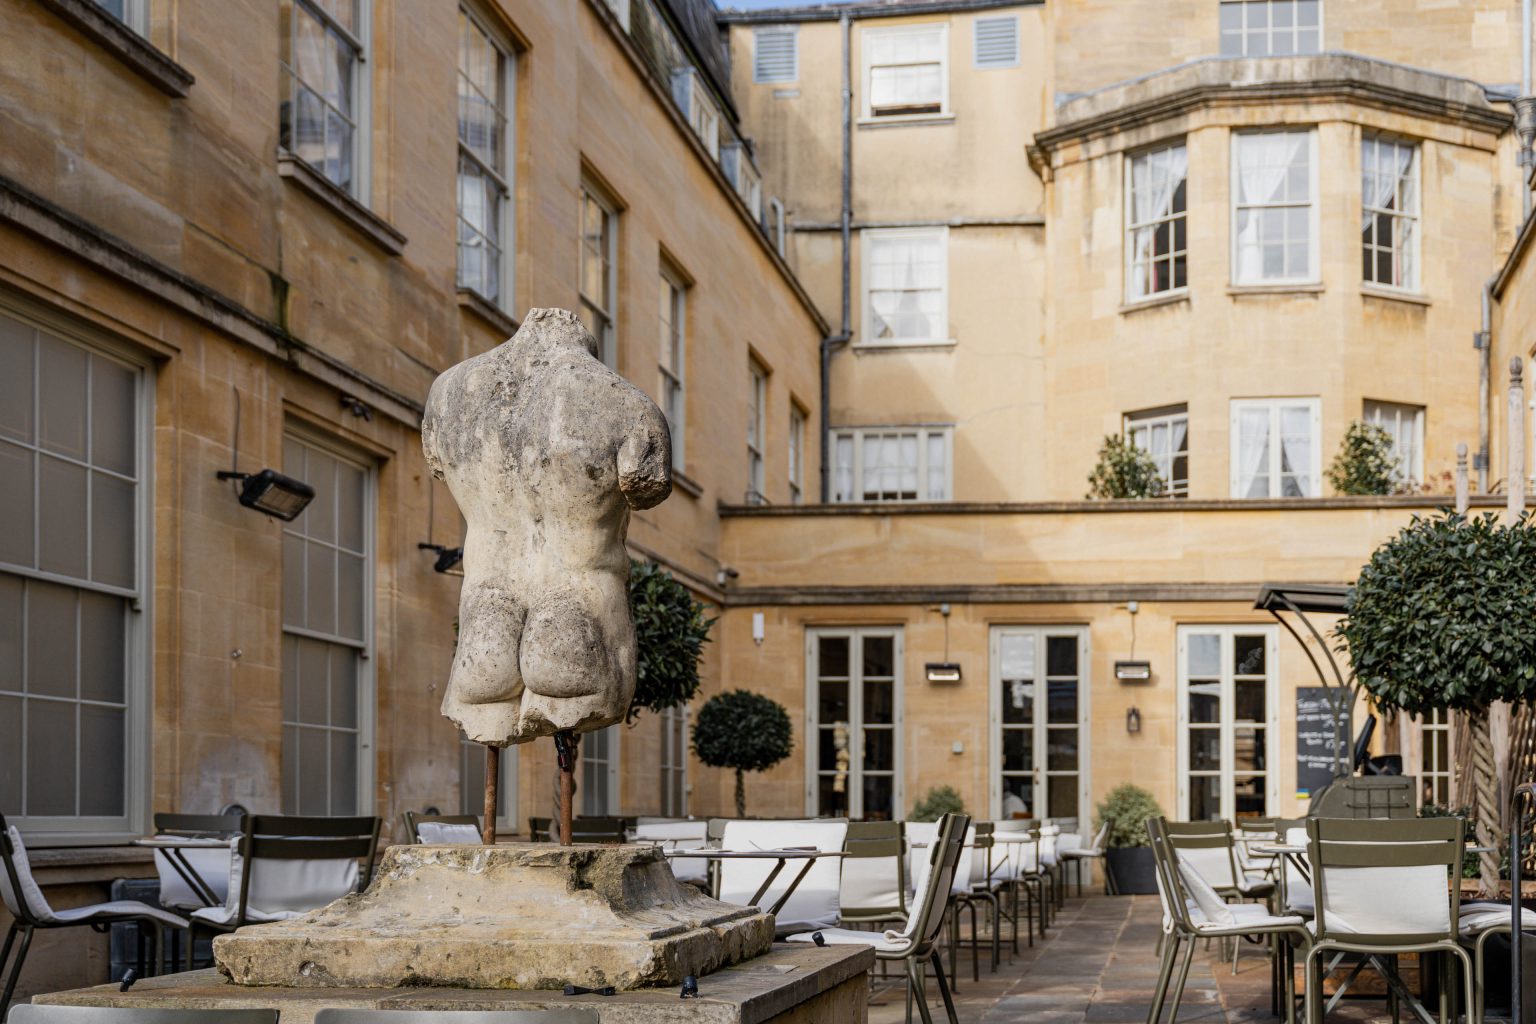 DSC00219-2 - 2023 - Quod Restaurant & Bar - Oxford - High Res - Terrace Outdoor Dining Statue William - Web Hero